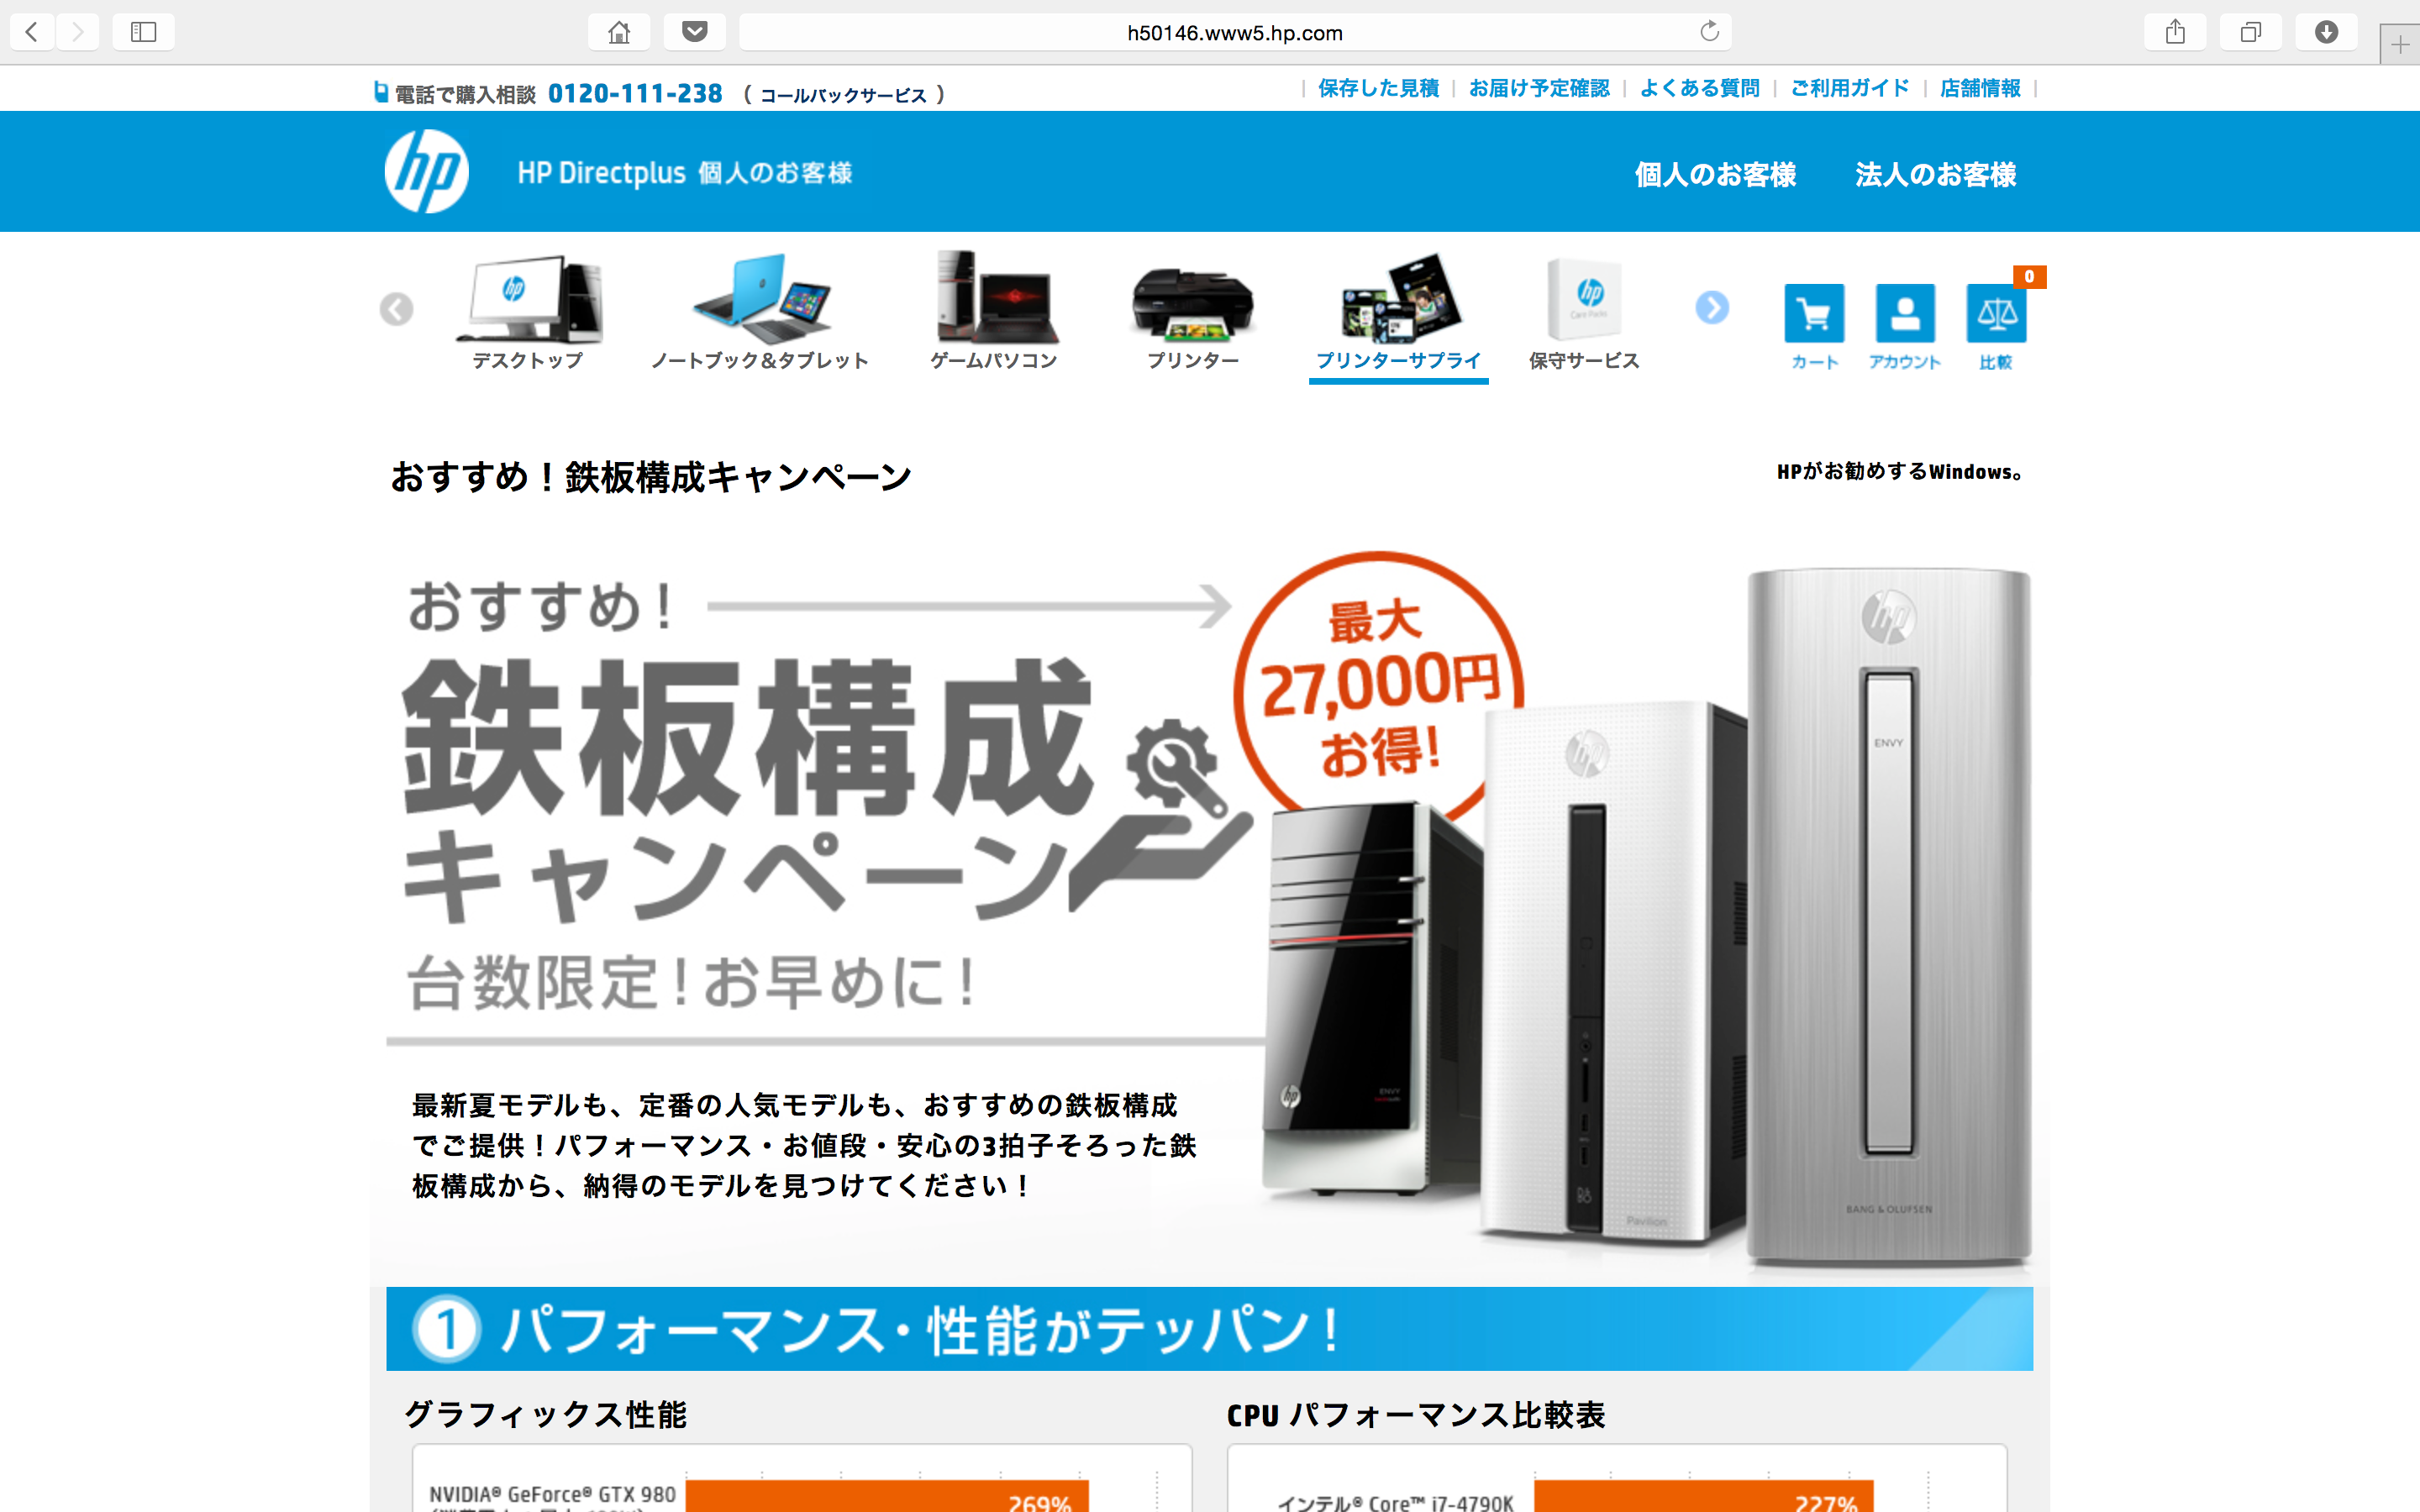 HP ENVY 750 - 080 jp／CT 東京生産 鉄板モデル